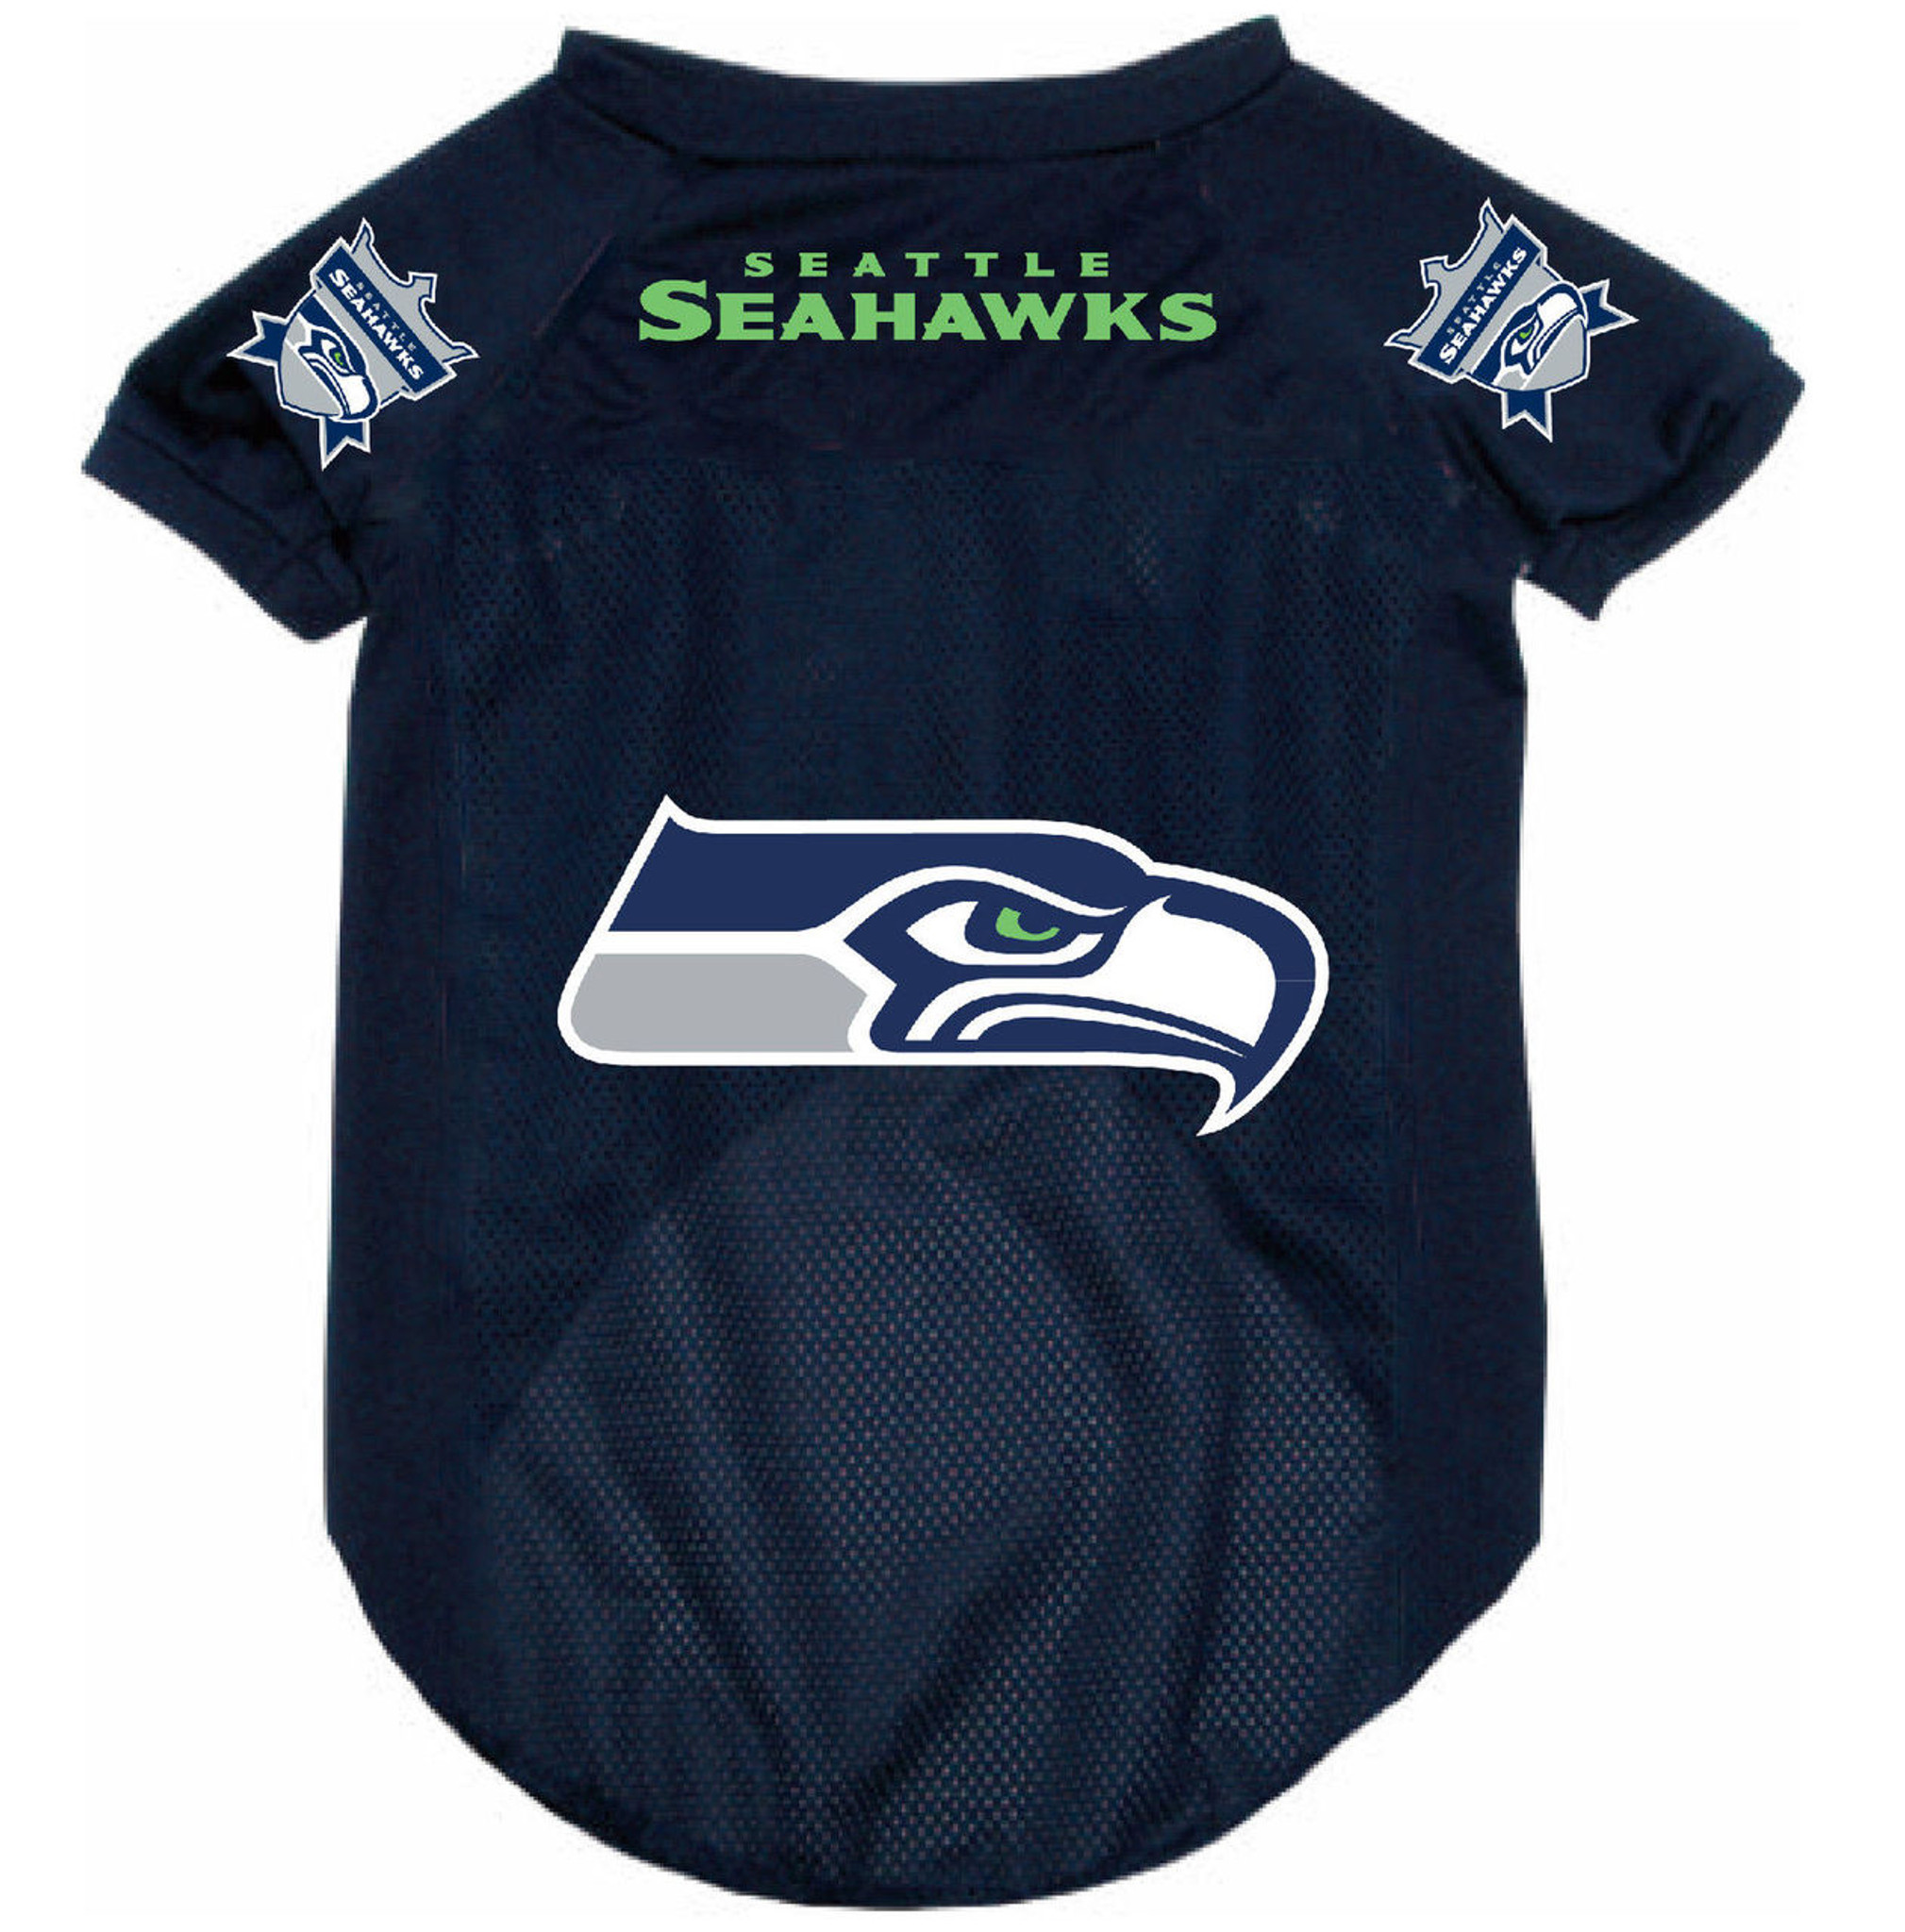 seahawks football jersey